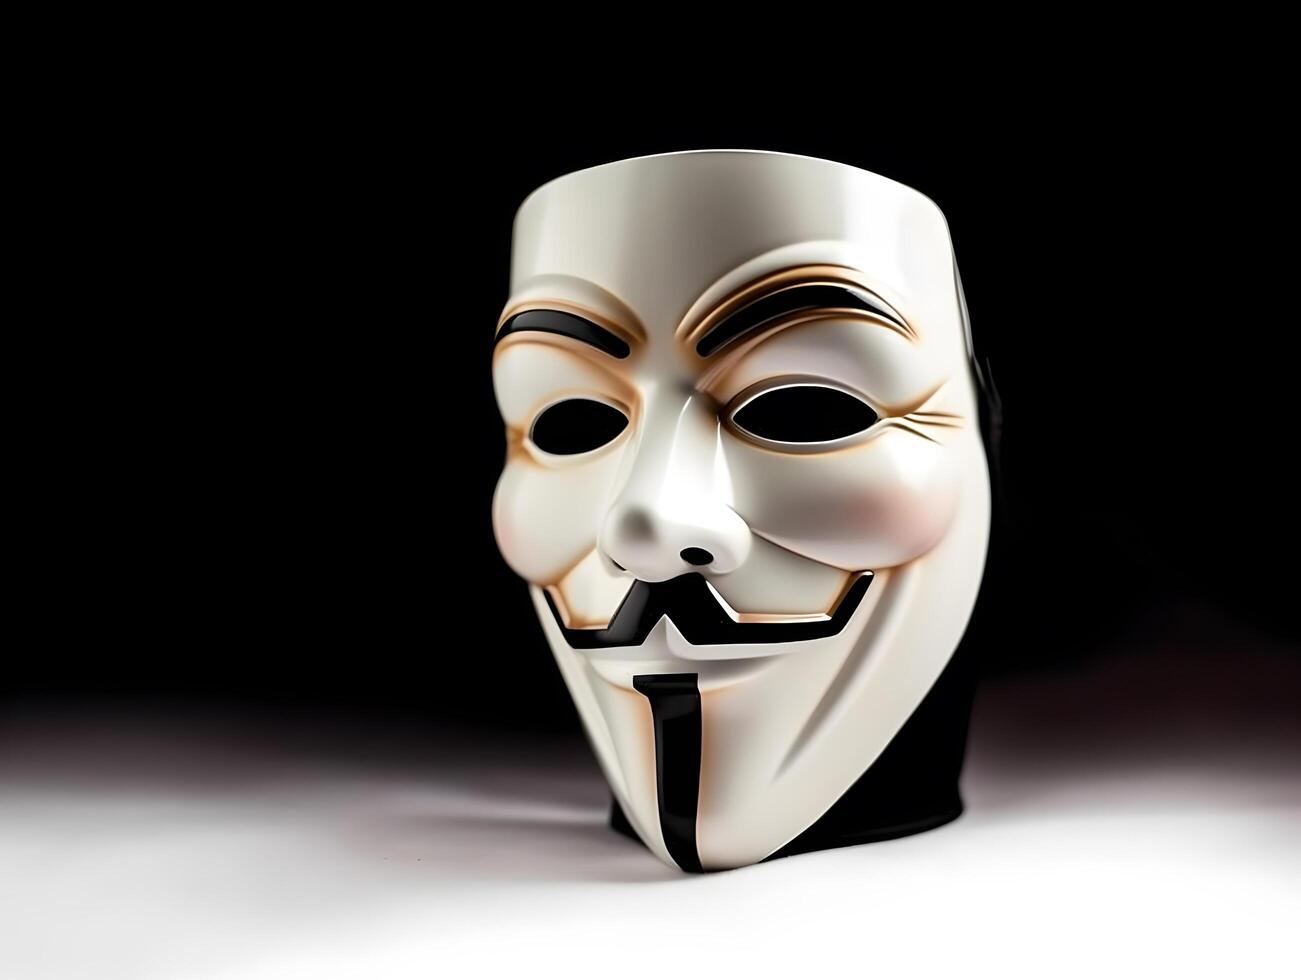 Anonymous face mask. Concept of dark mind, hacking, dark side, secret, etc. image photo